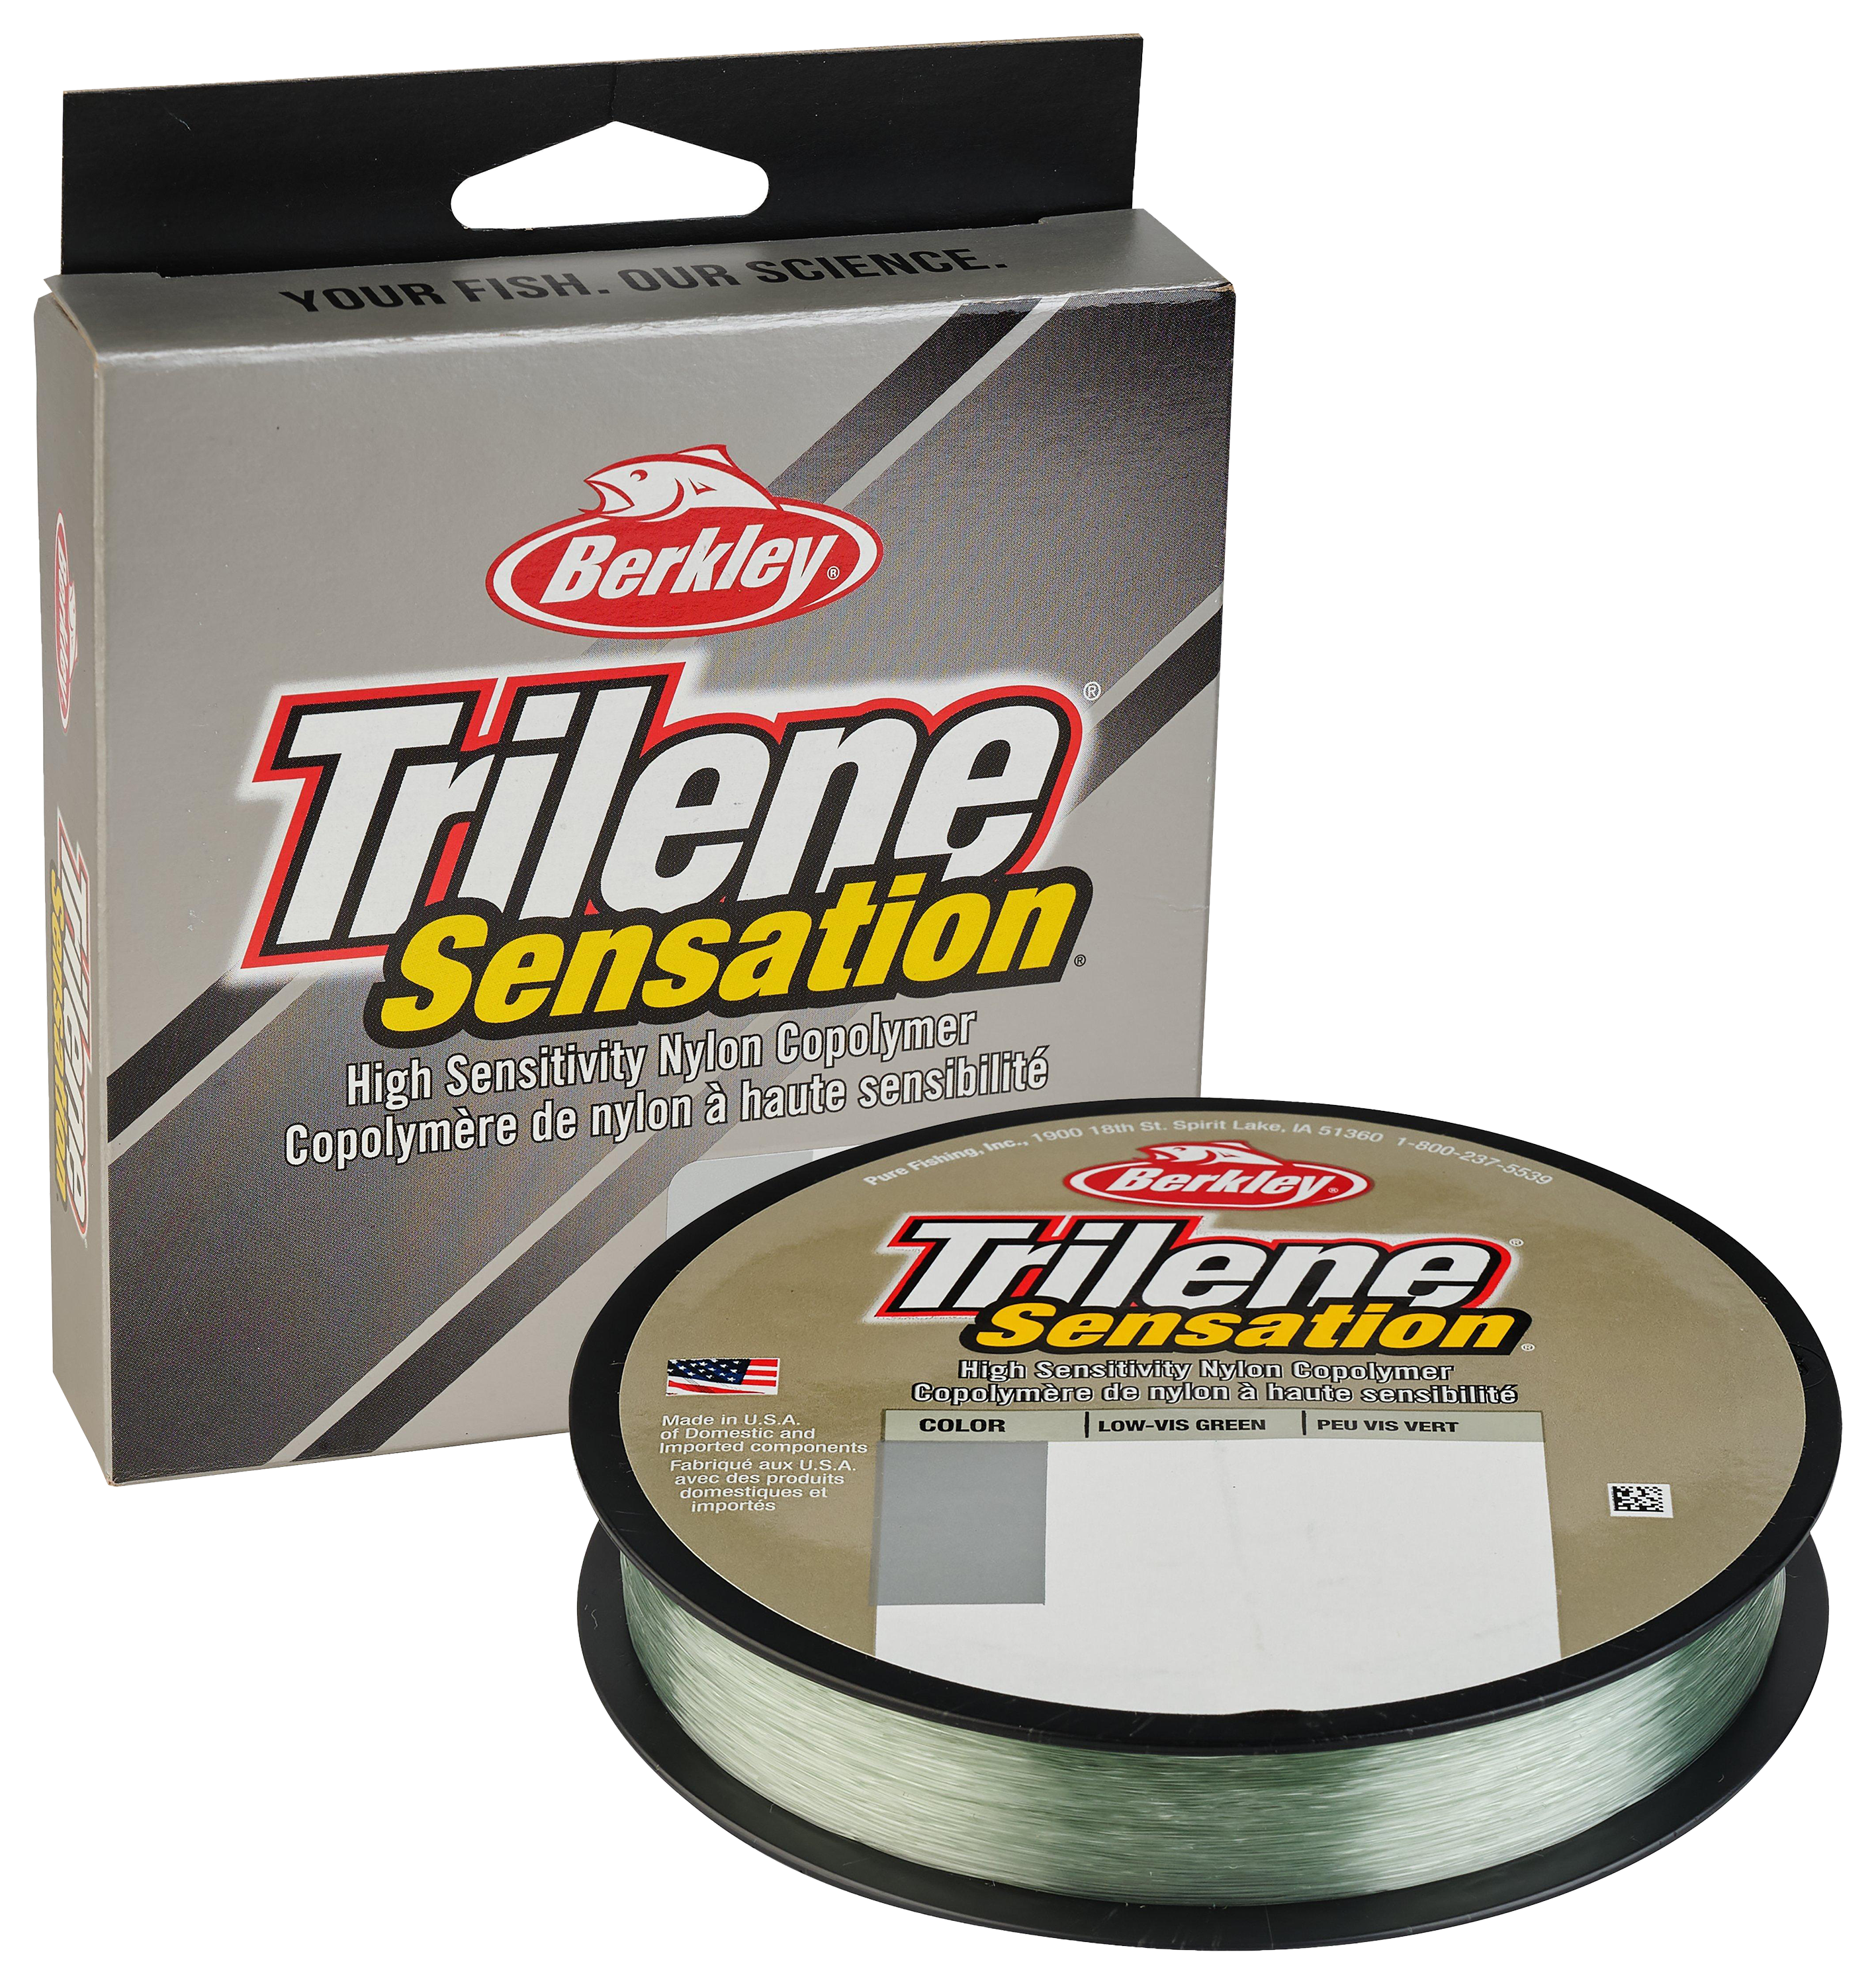 Berkley Trilene Sensation 4 lb. 330yd / Solar